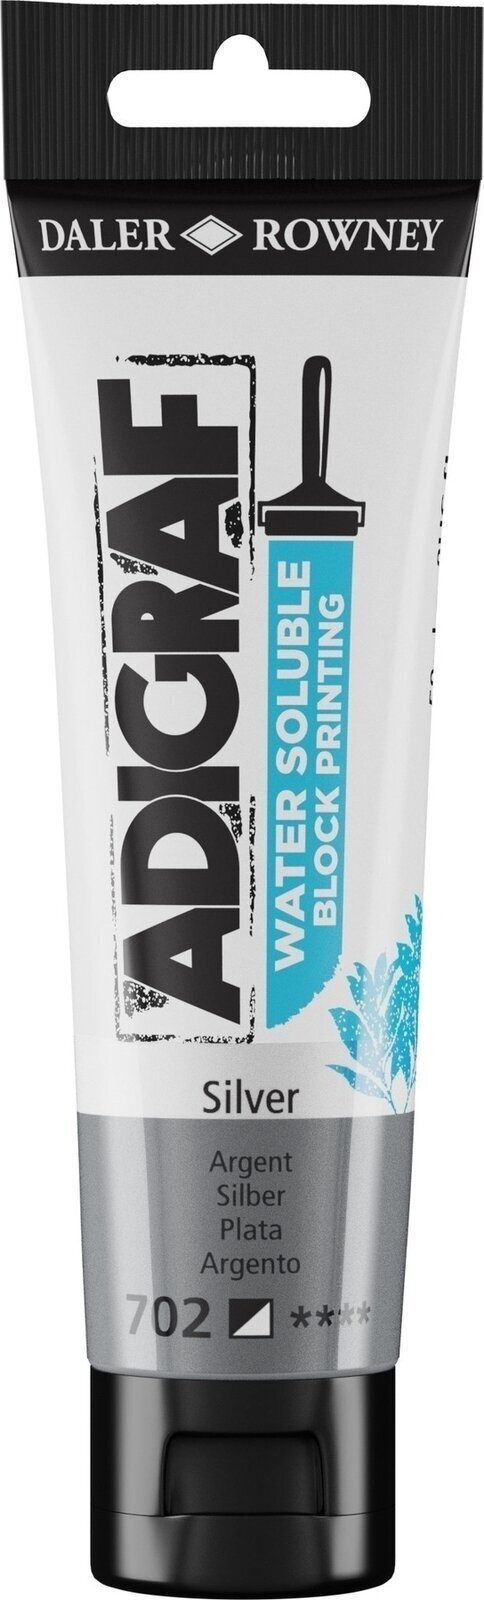 Vernice per linoleografia Daler Rowney Adigraf Block Printing Water Soluble Colour Vernice per linoleografia Silver 59 ml